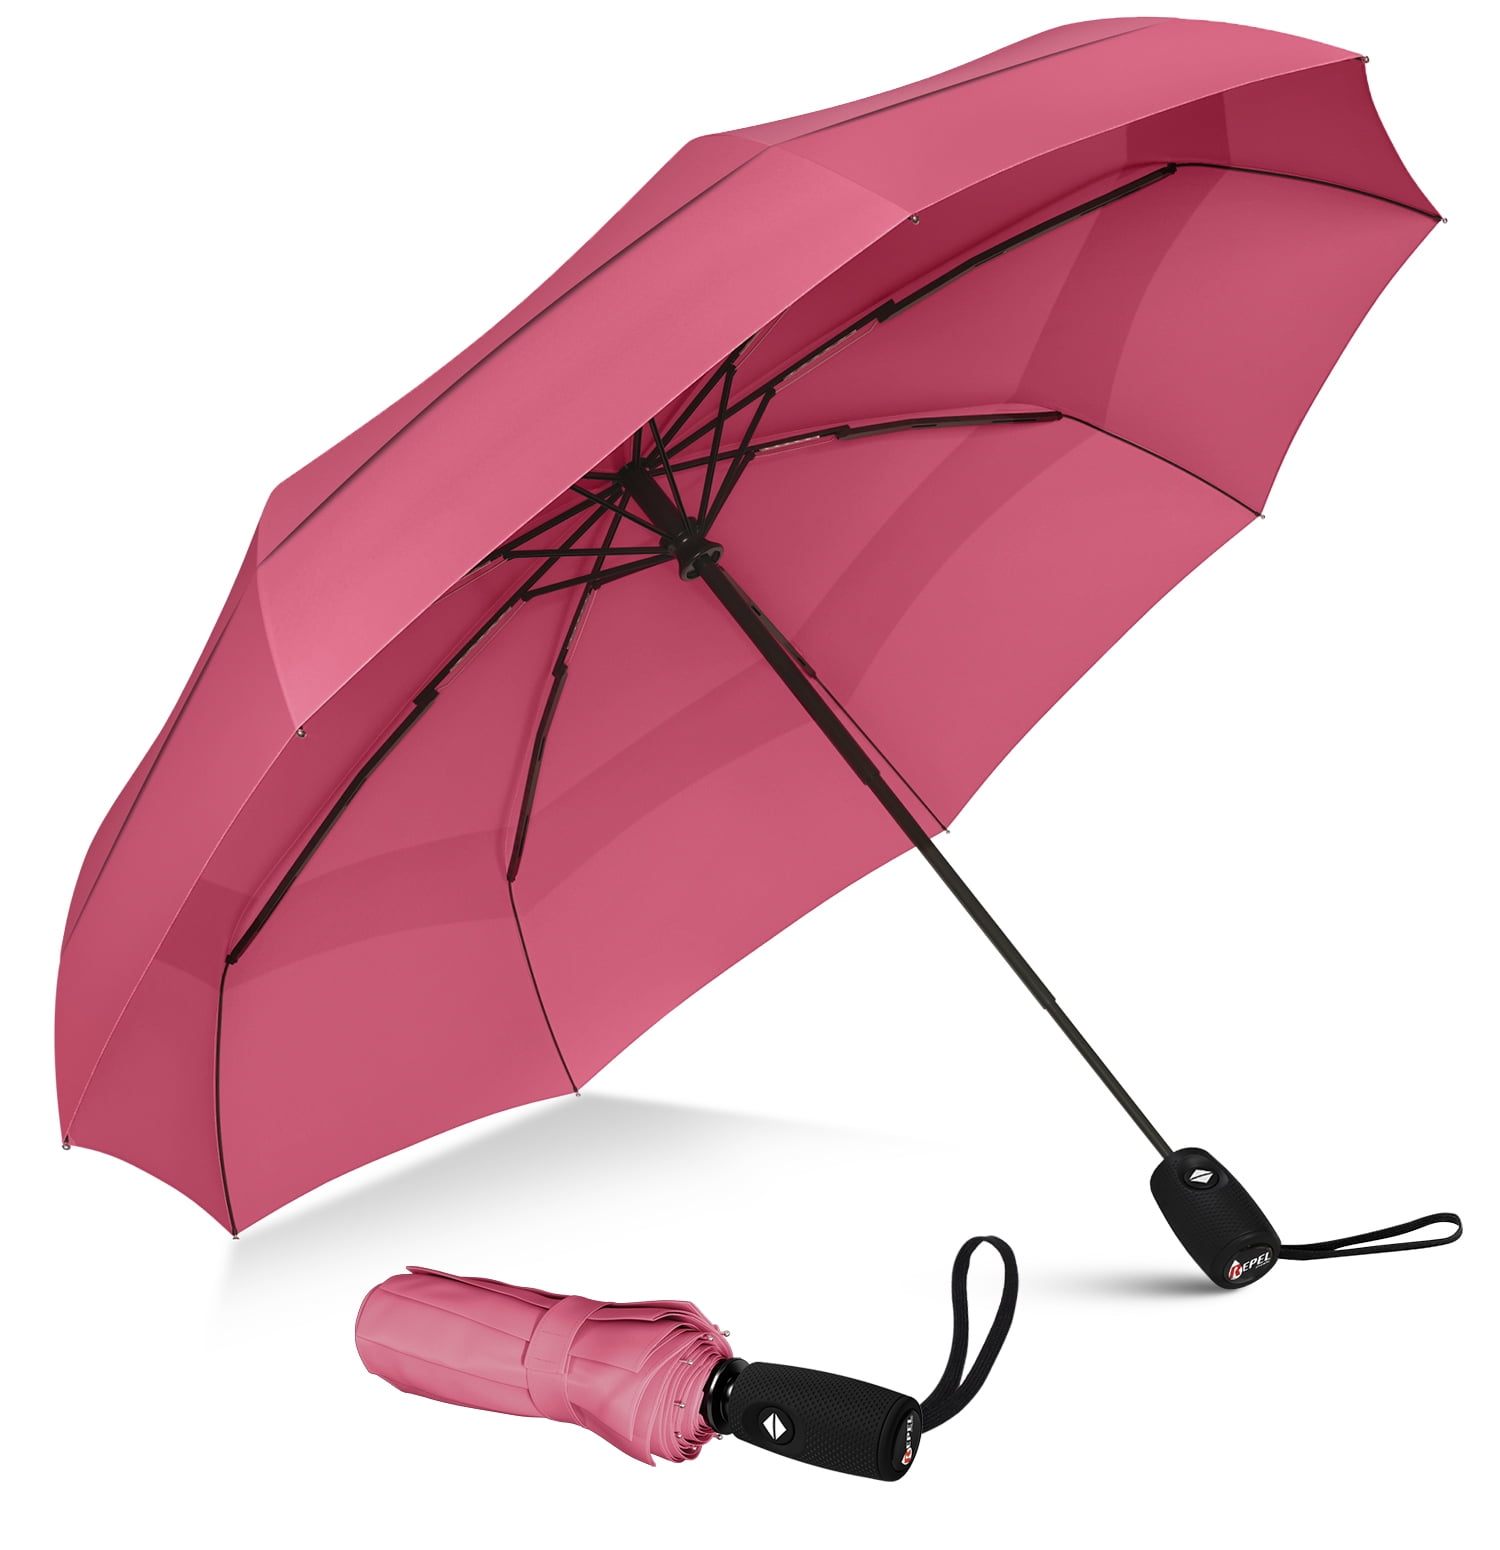 Auto Open &Close Compact DuPont Teflon Coating Travel Windproof Unisex Umbrella 